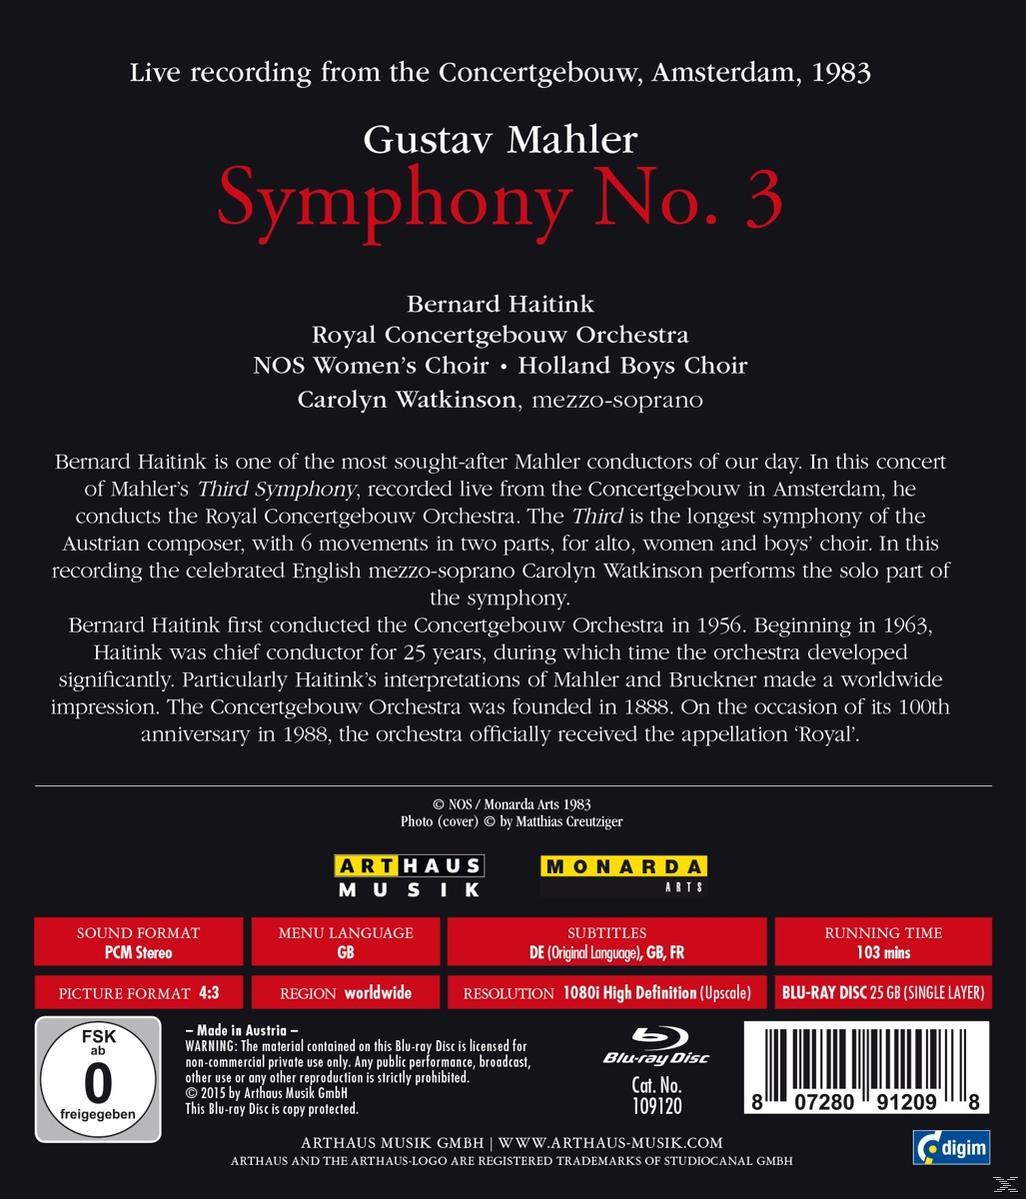 Concertgebouw VARIOUS, - Sinfonie Watkinson, - 3 (Blu-ray) Royal Carolyn Orchestra